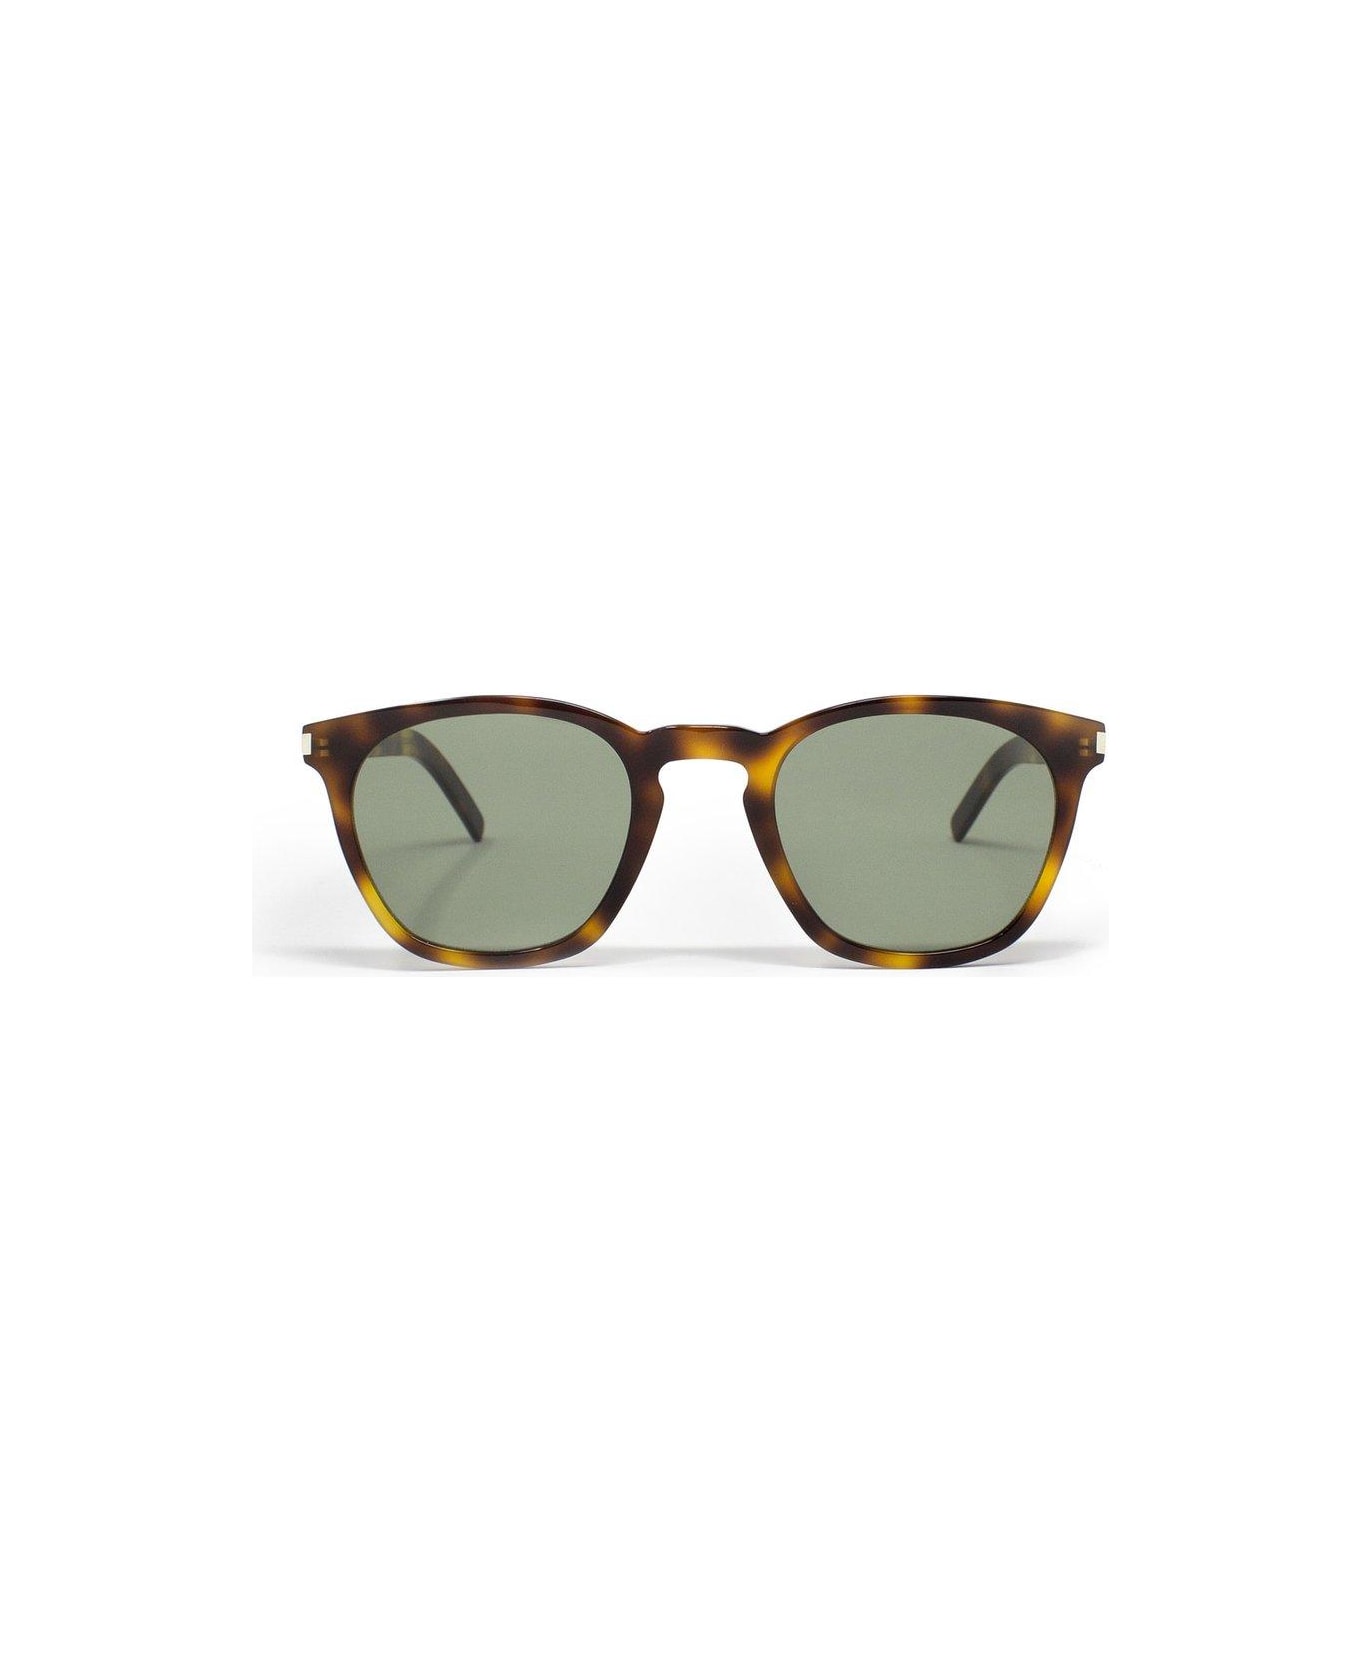 Saint Laurent Eyewear Wellington Sunglasses Sunglasses - 002 HAVANA HAVANA GREEN